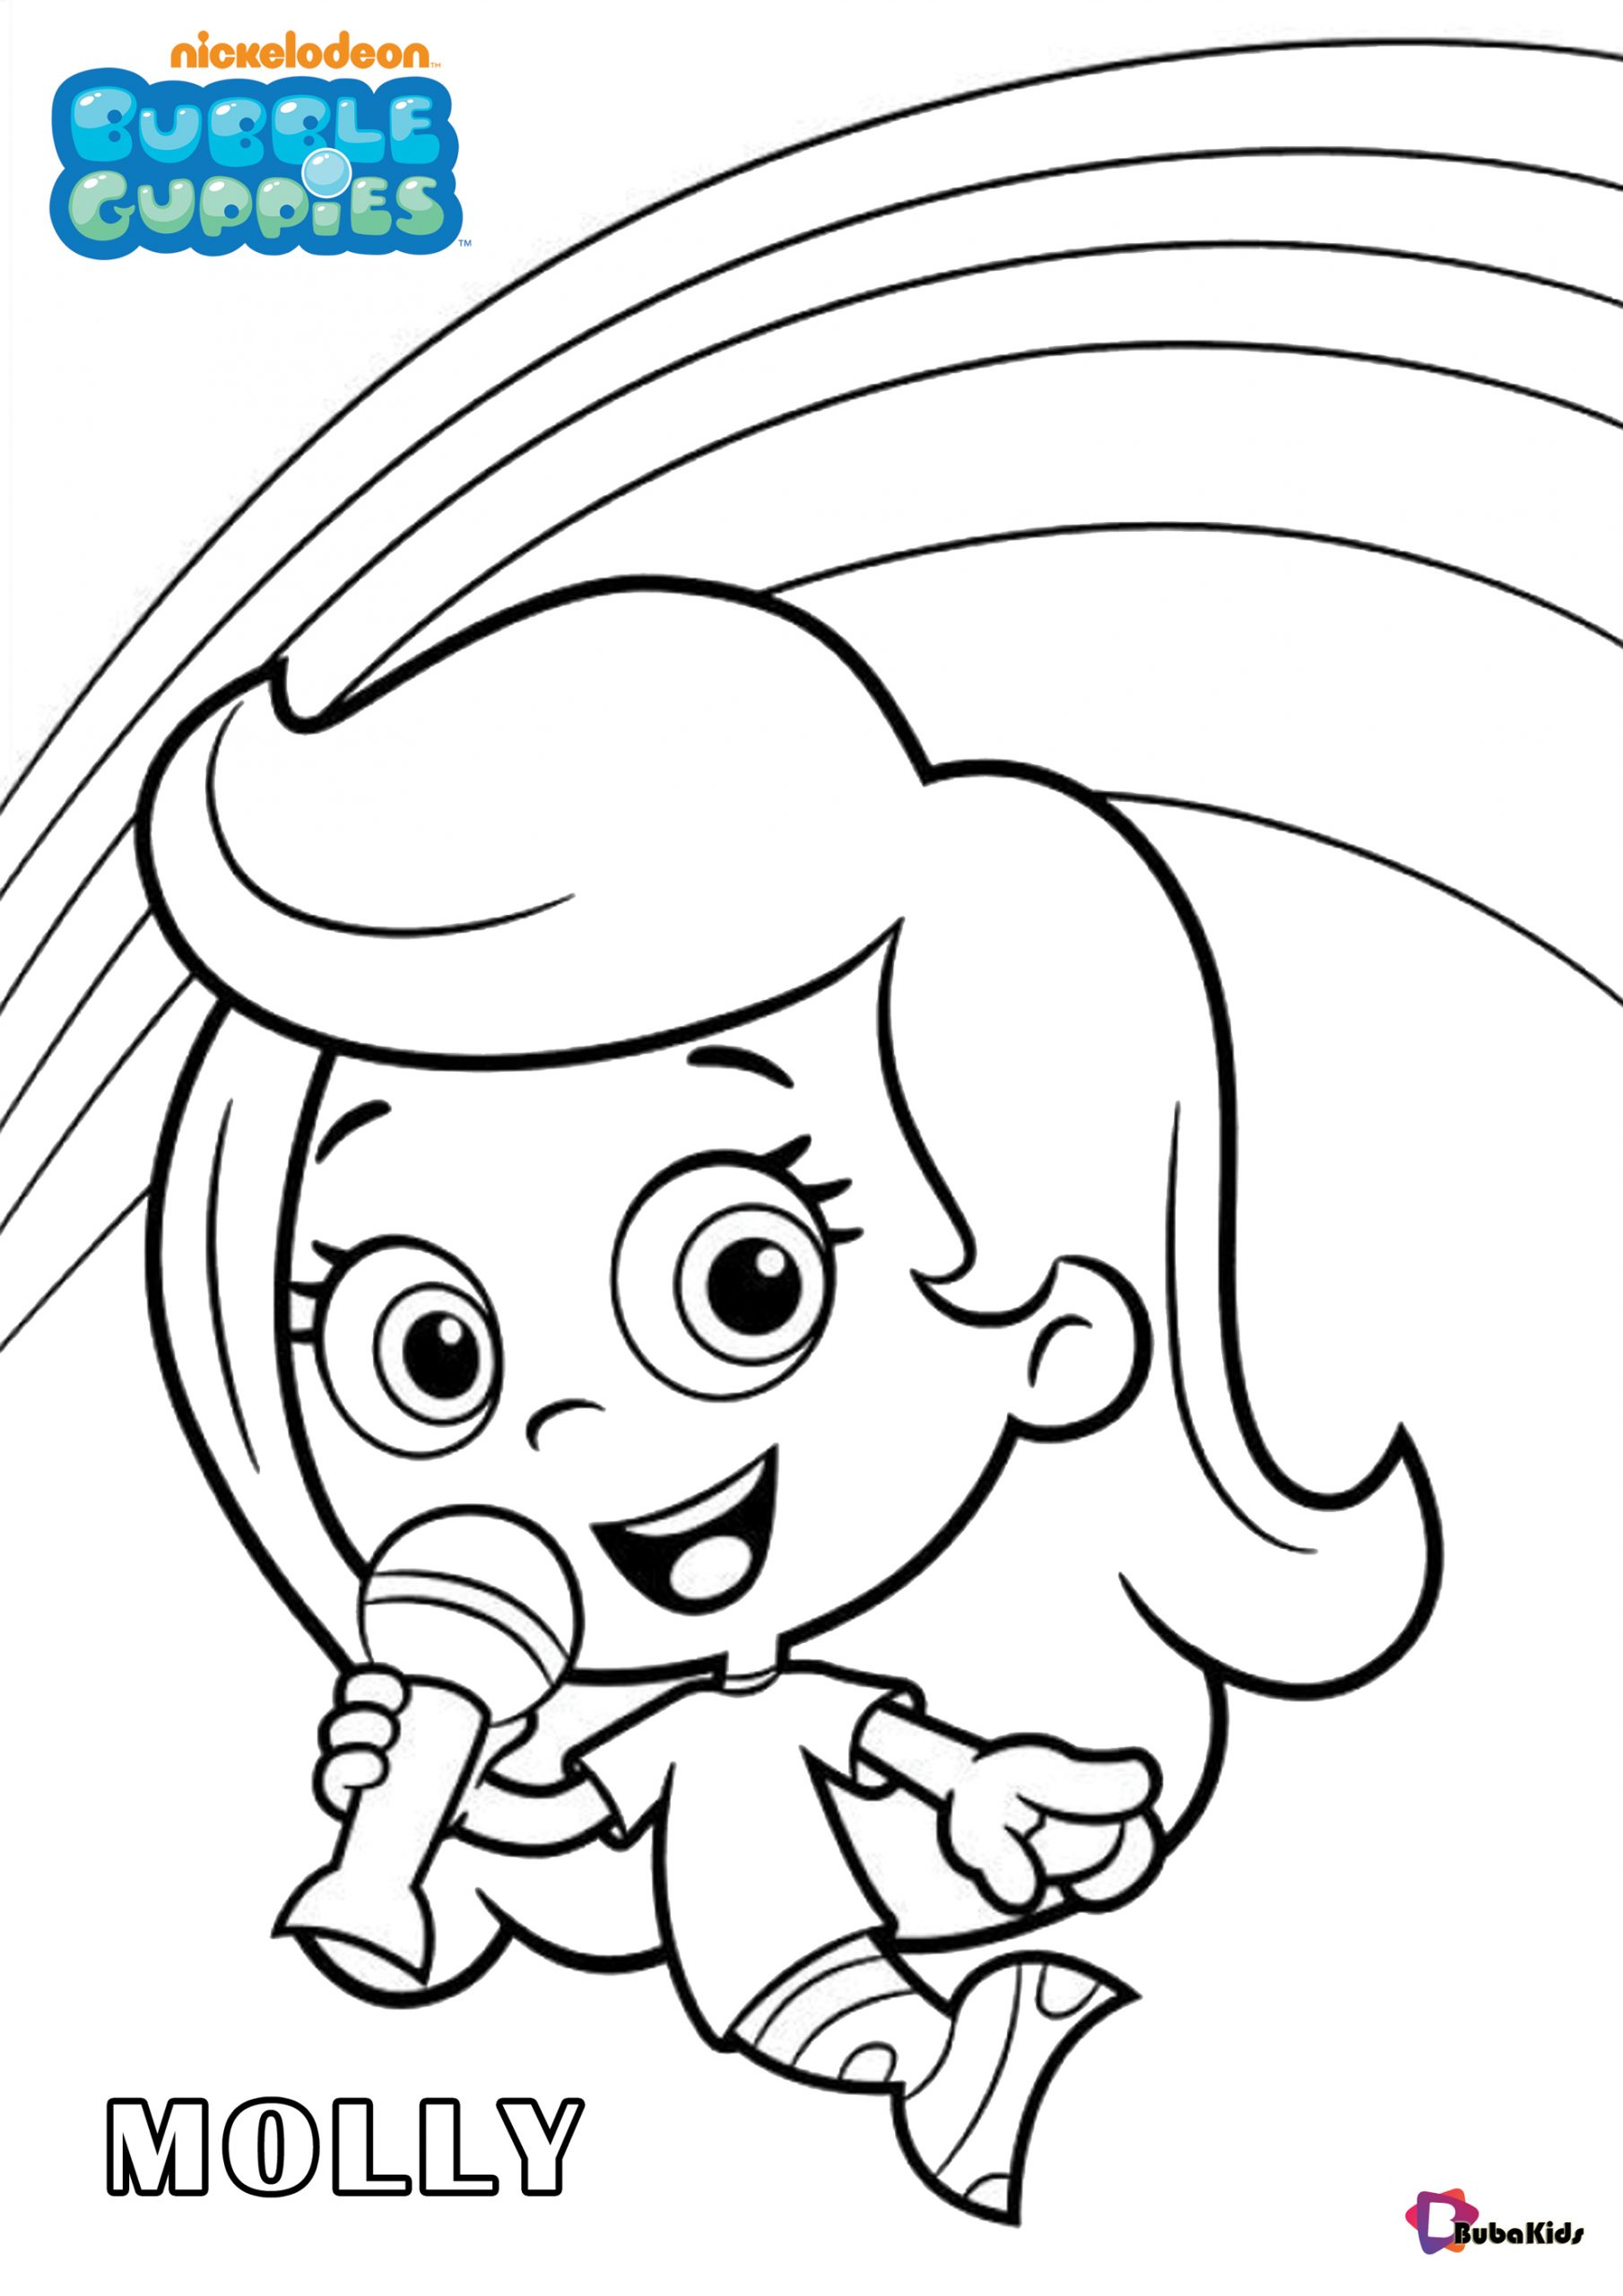 Molly Nickelodeon’s Bubble Guppies character coloring sheet Wallpaper